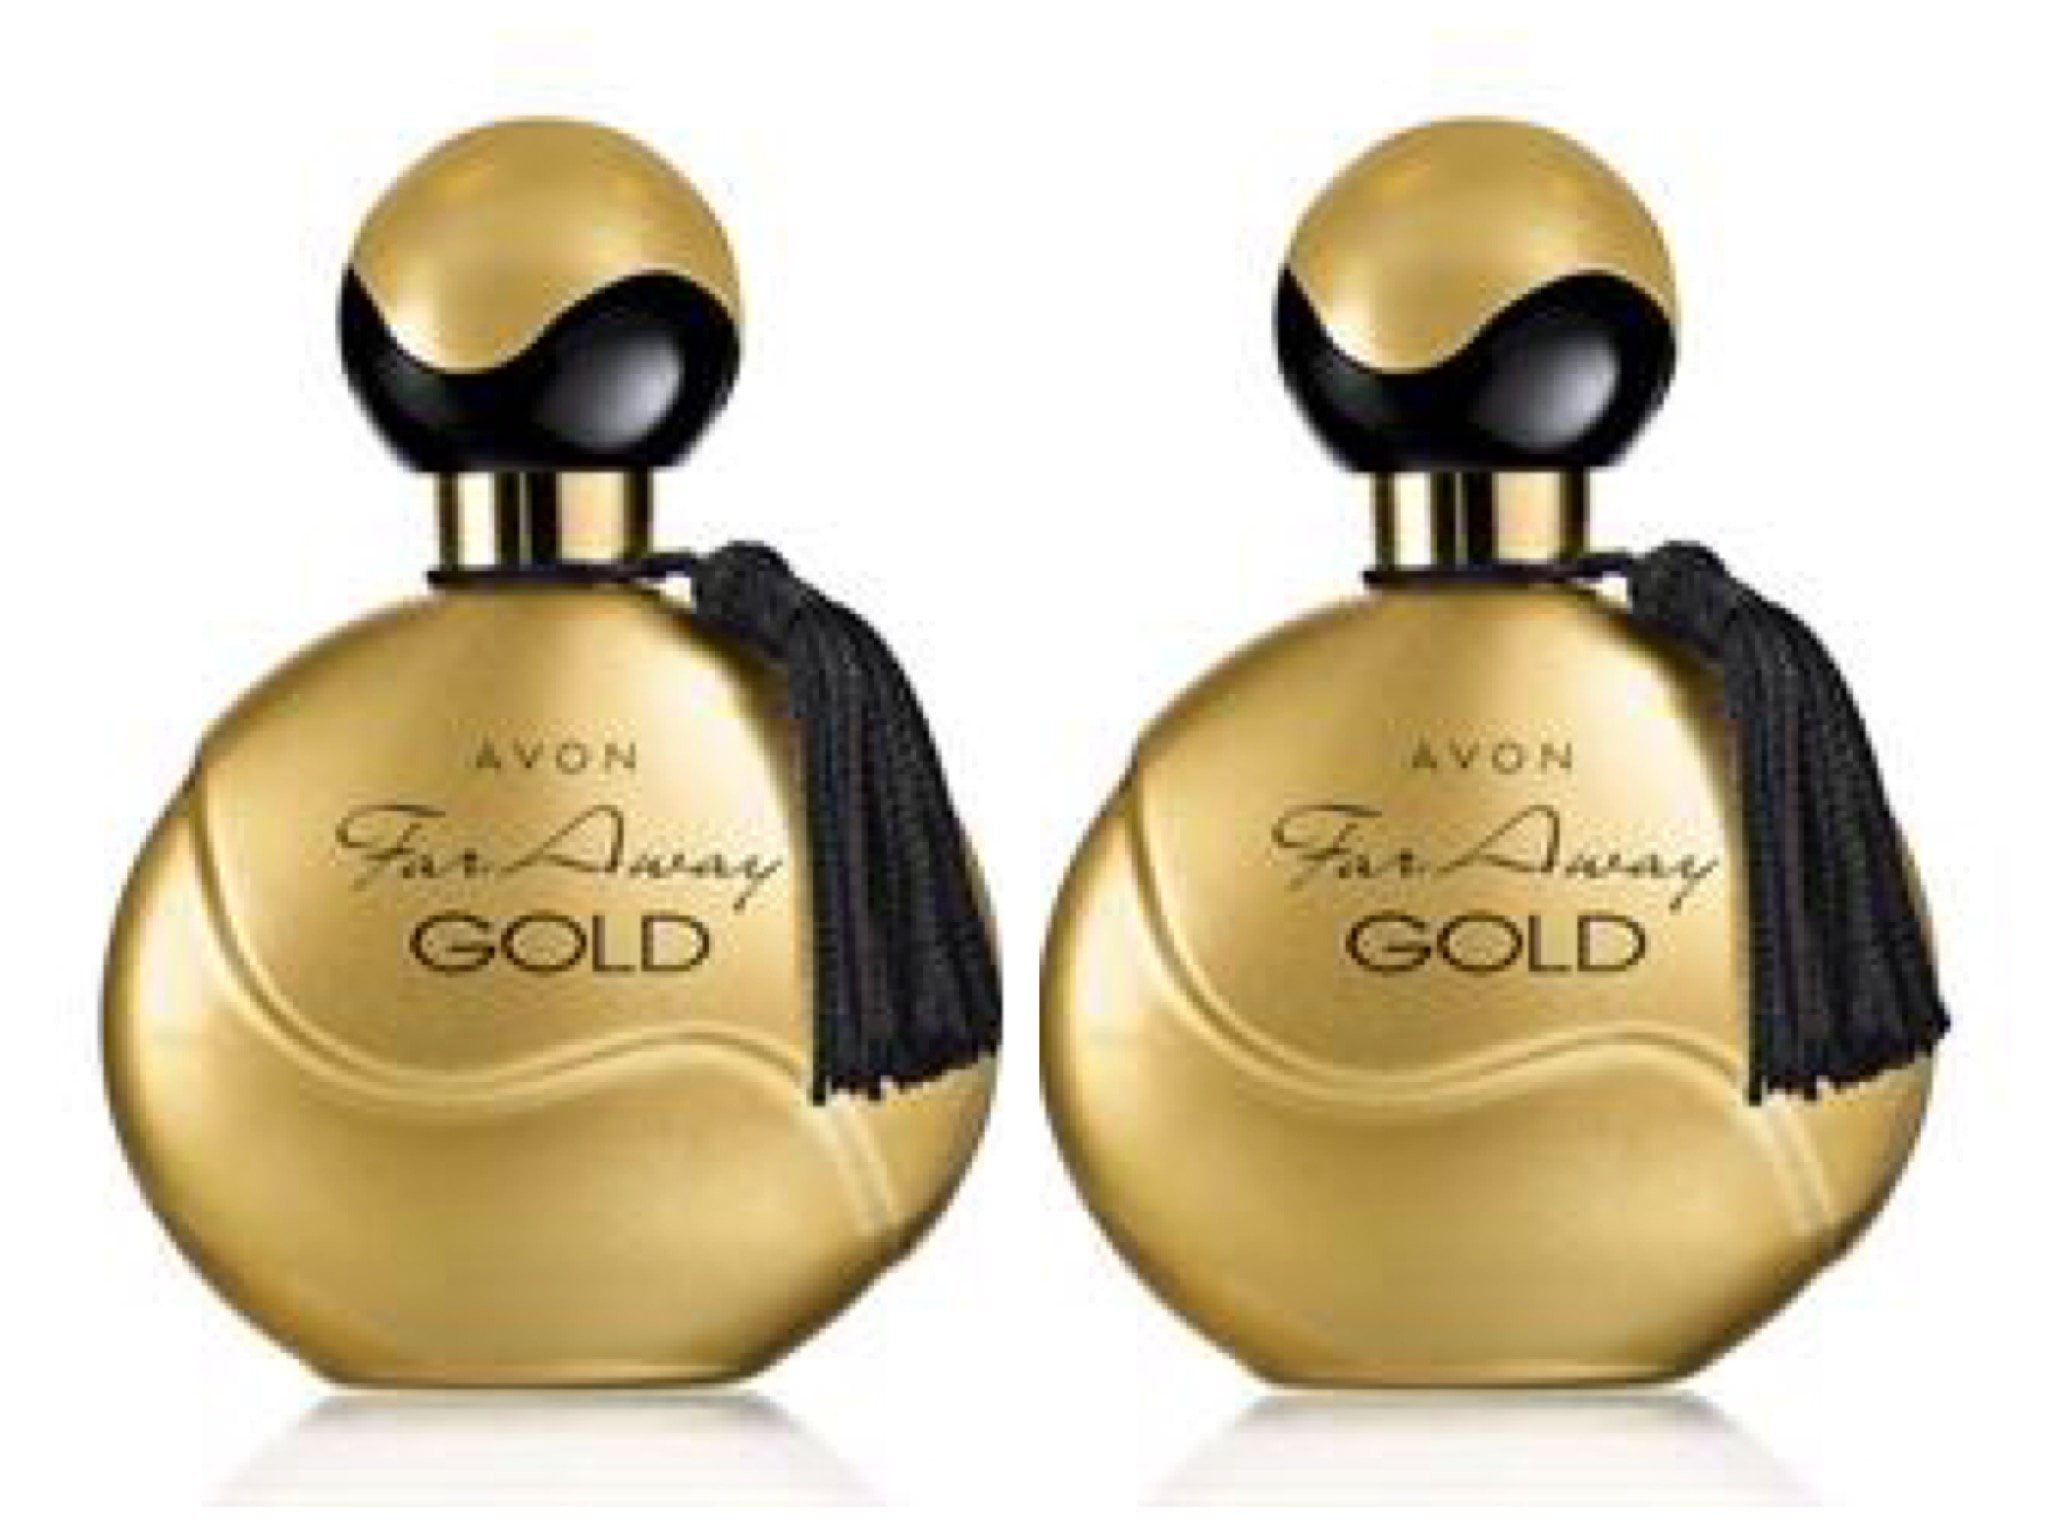 Avon Far Away Gold Eau de Parfum Spray 1.7 fl Oz lot of 2 in box